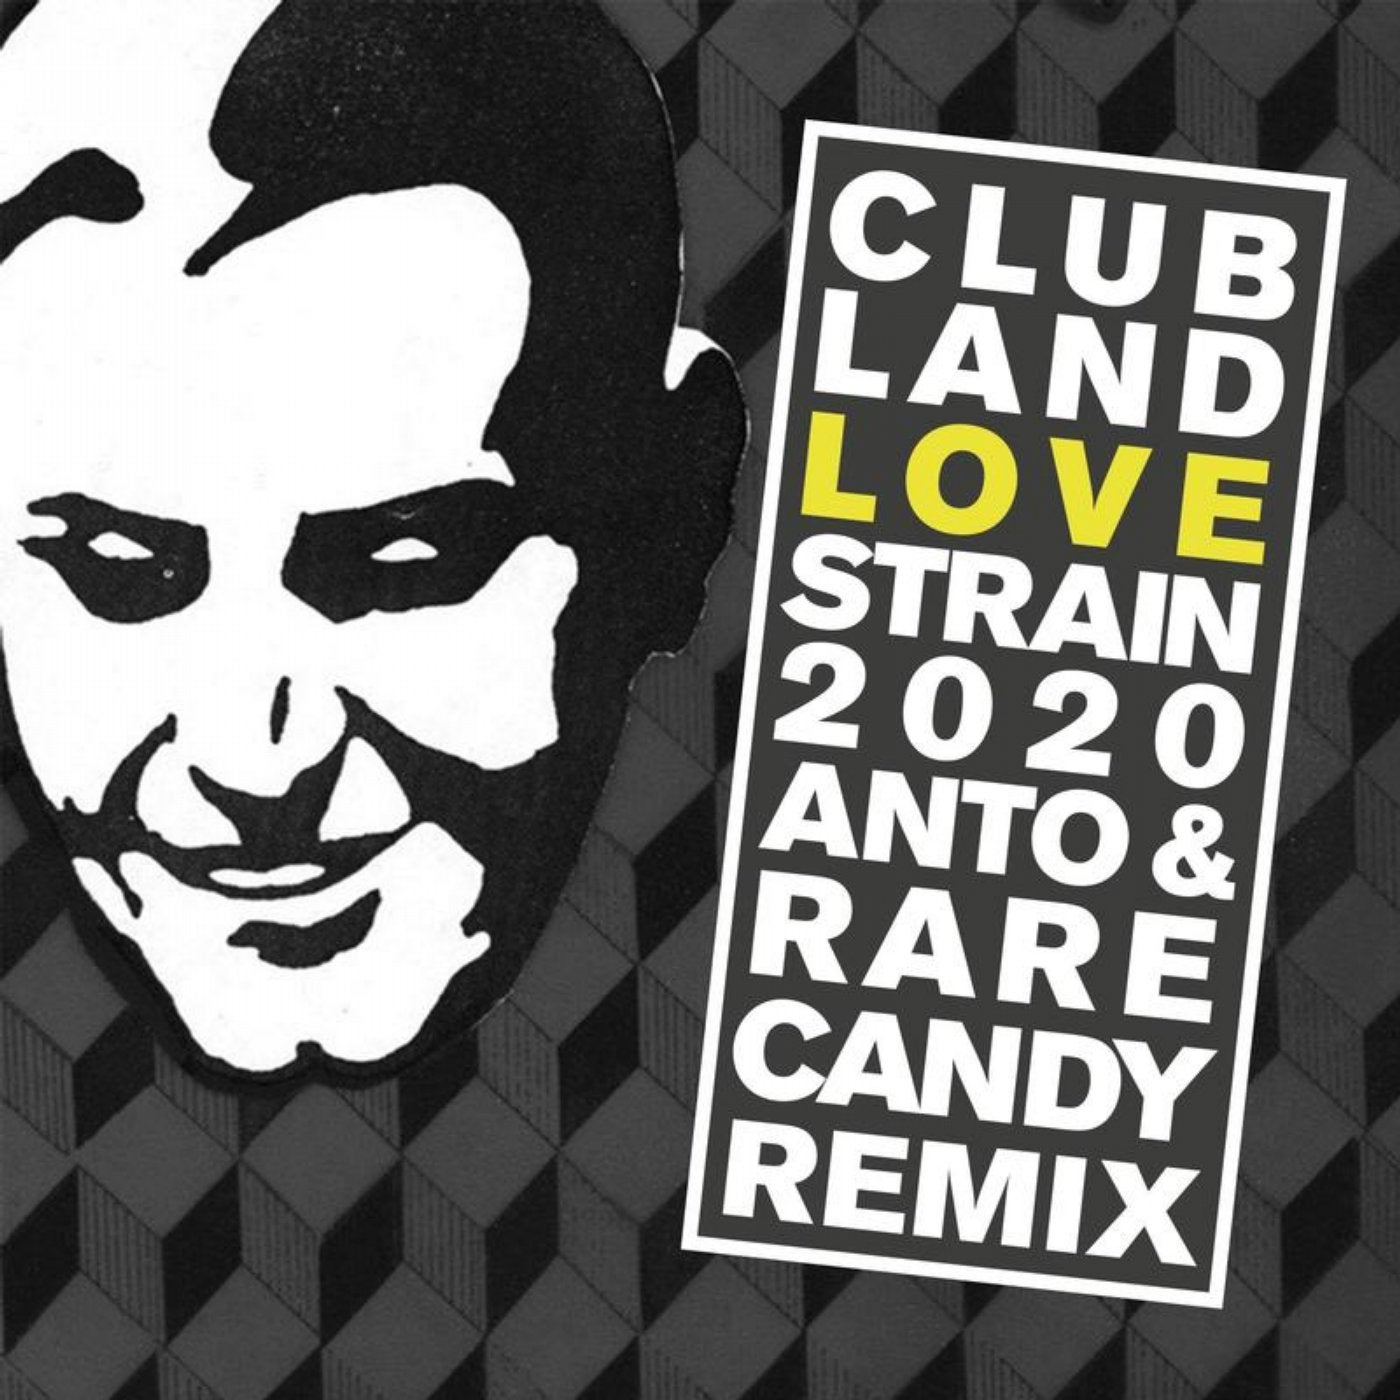 Love Strain 2020 (Anto & Rare Candy Remix)